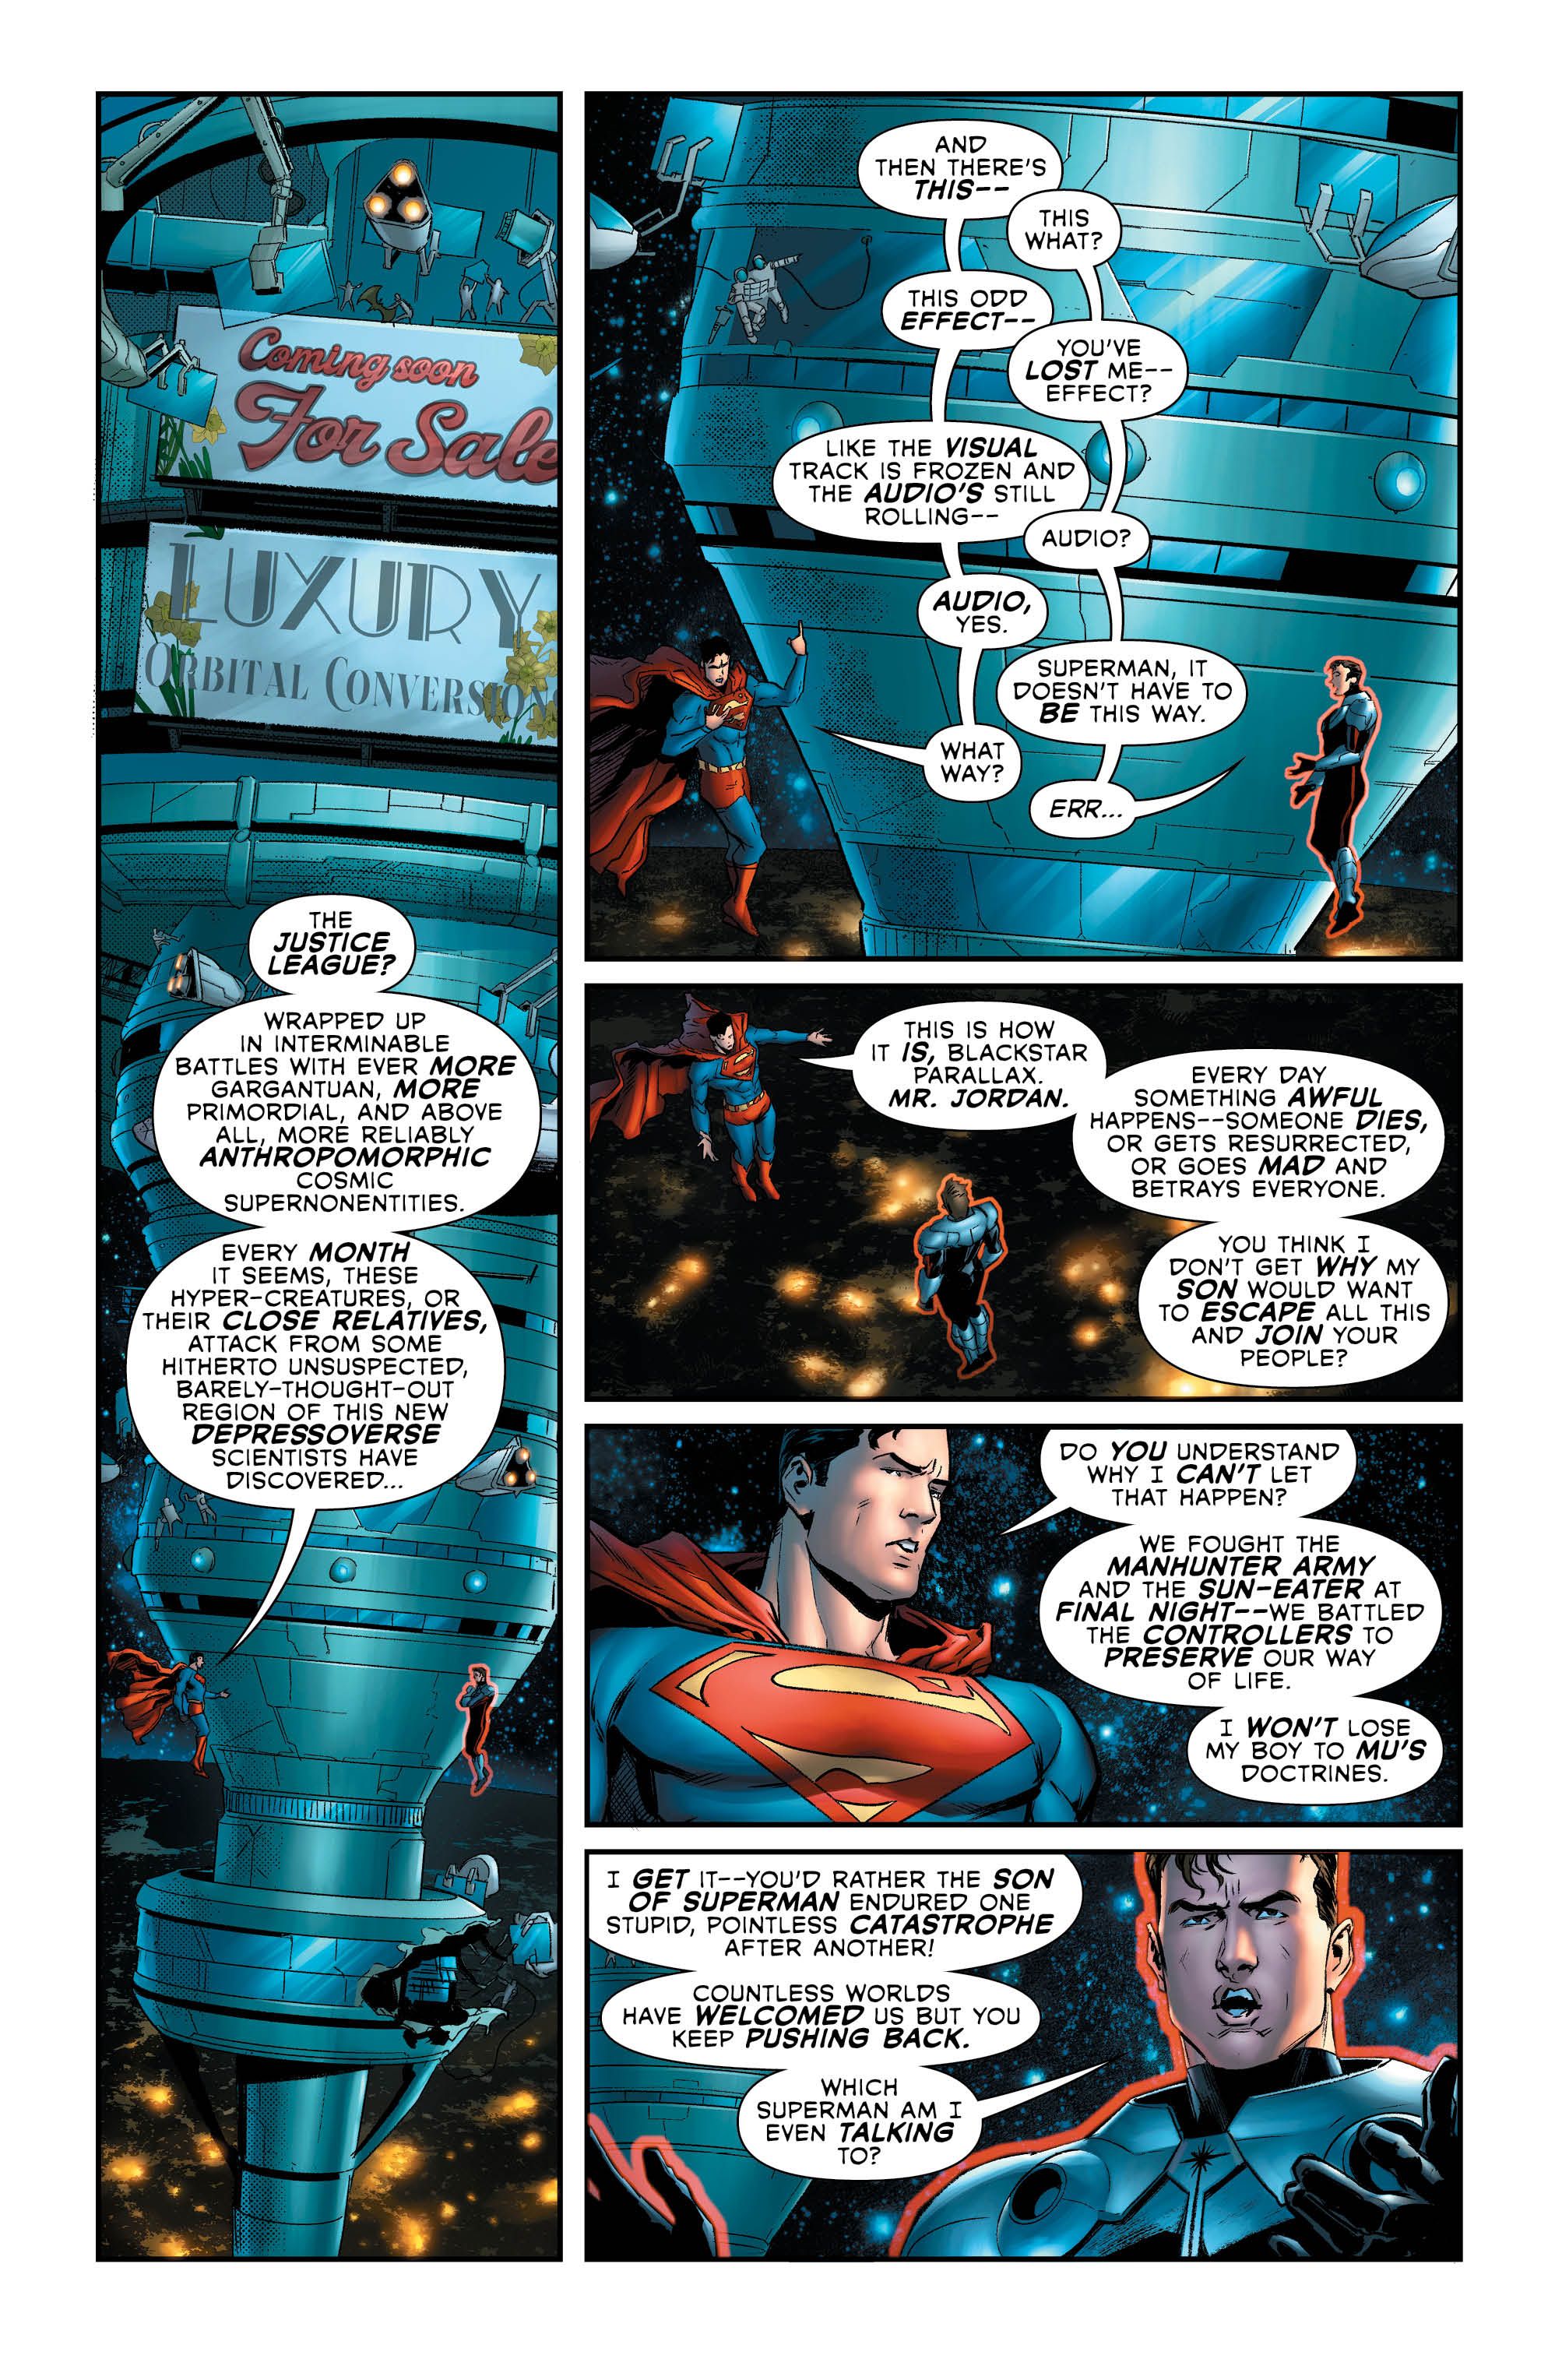 EXCLUSIVE Green Lantern Blackstars Sees Wonder Woman Brutally [SPOILER]